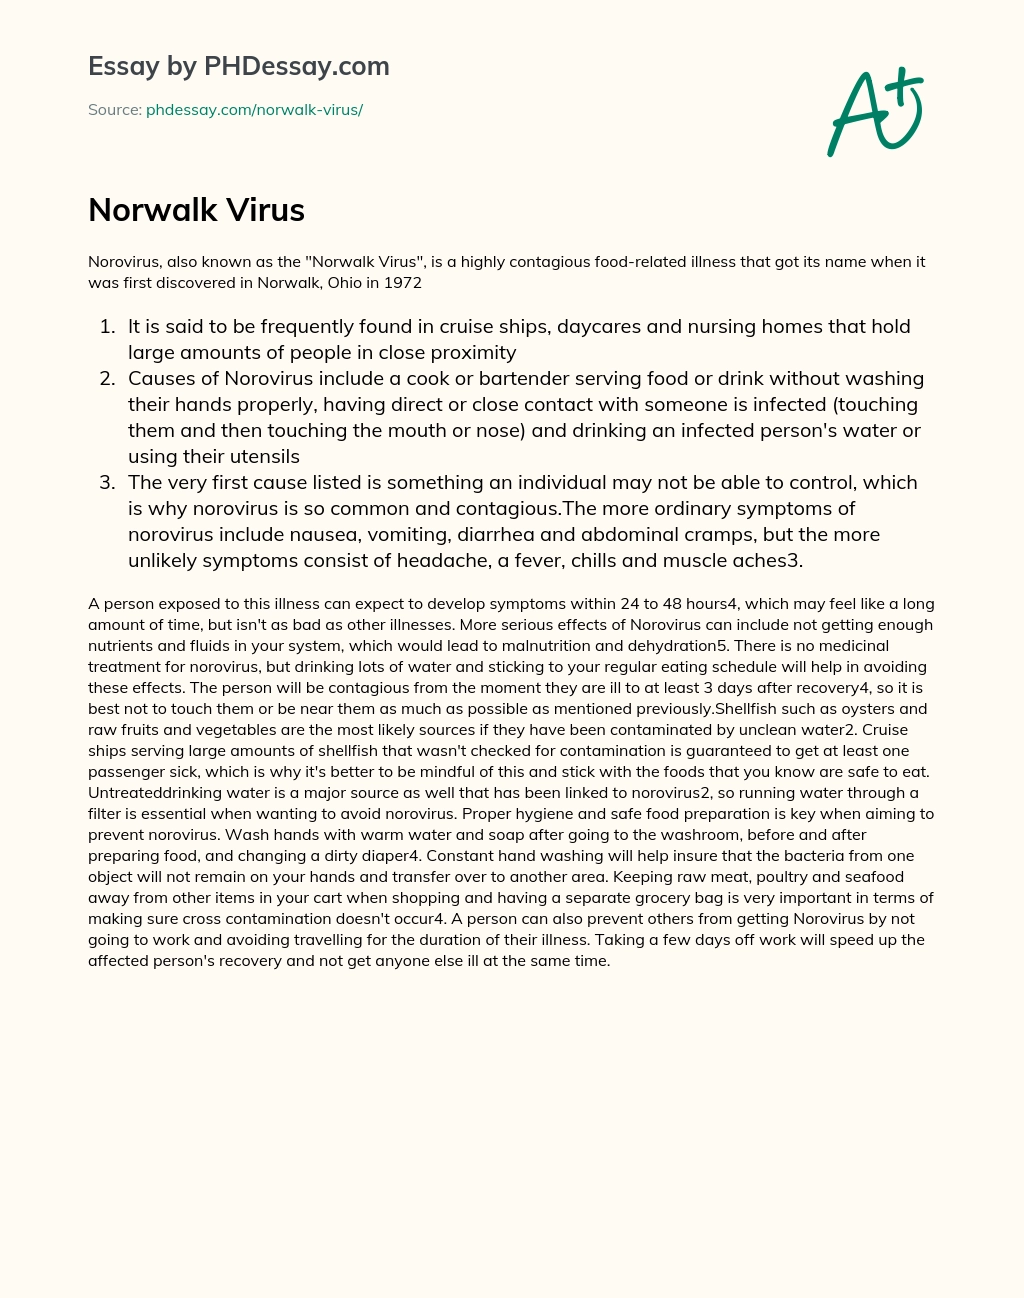 Norwalk Virus essay